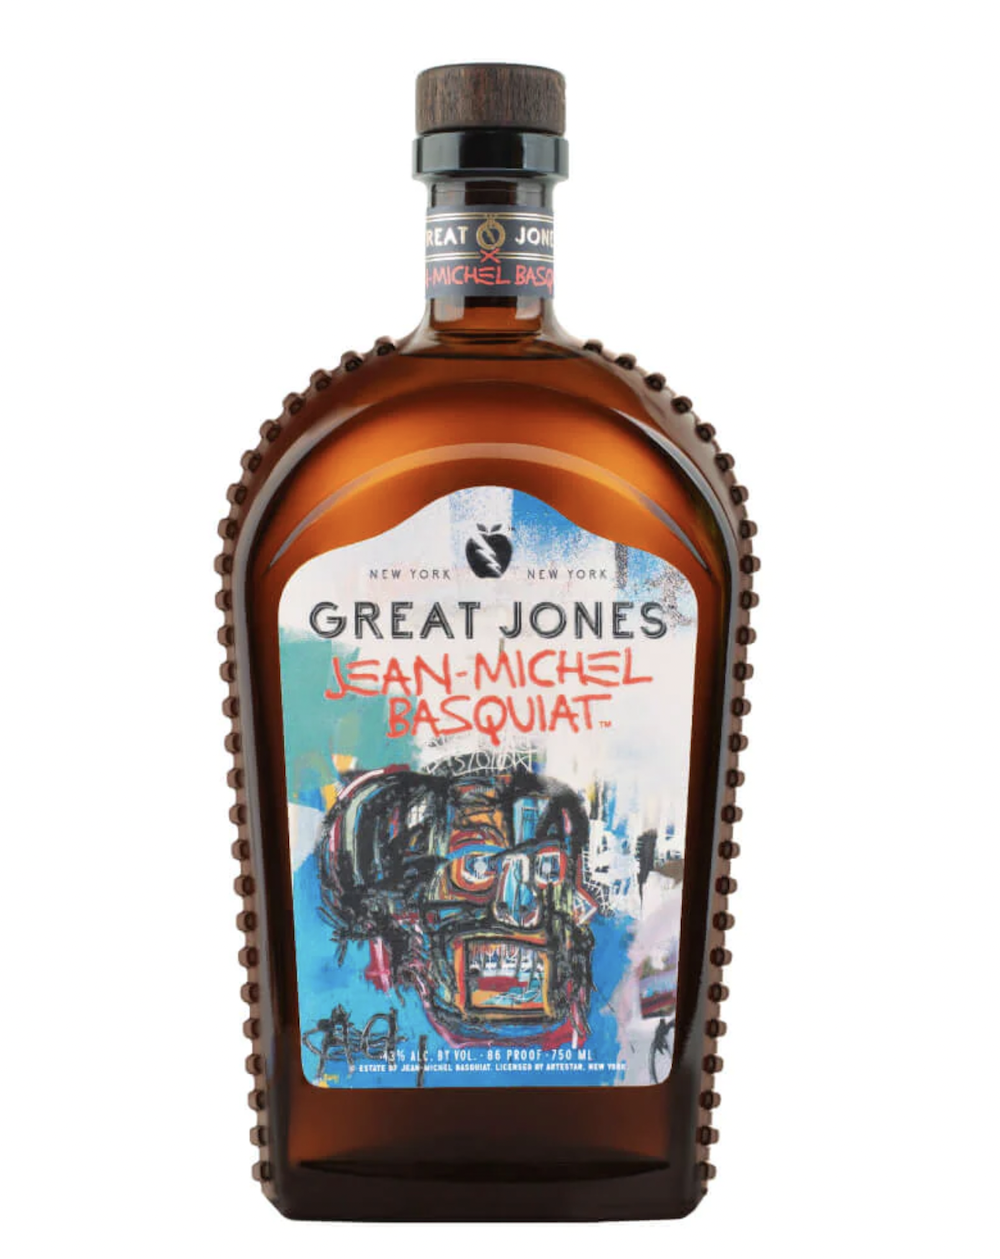 Great Jones Basquiat Skull label whiskey